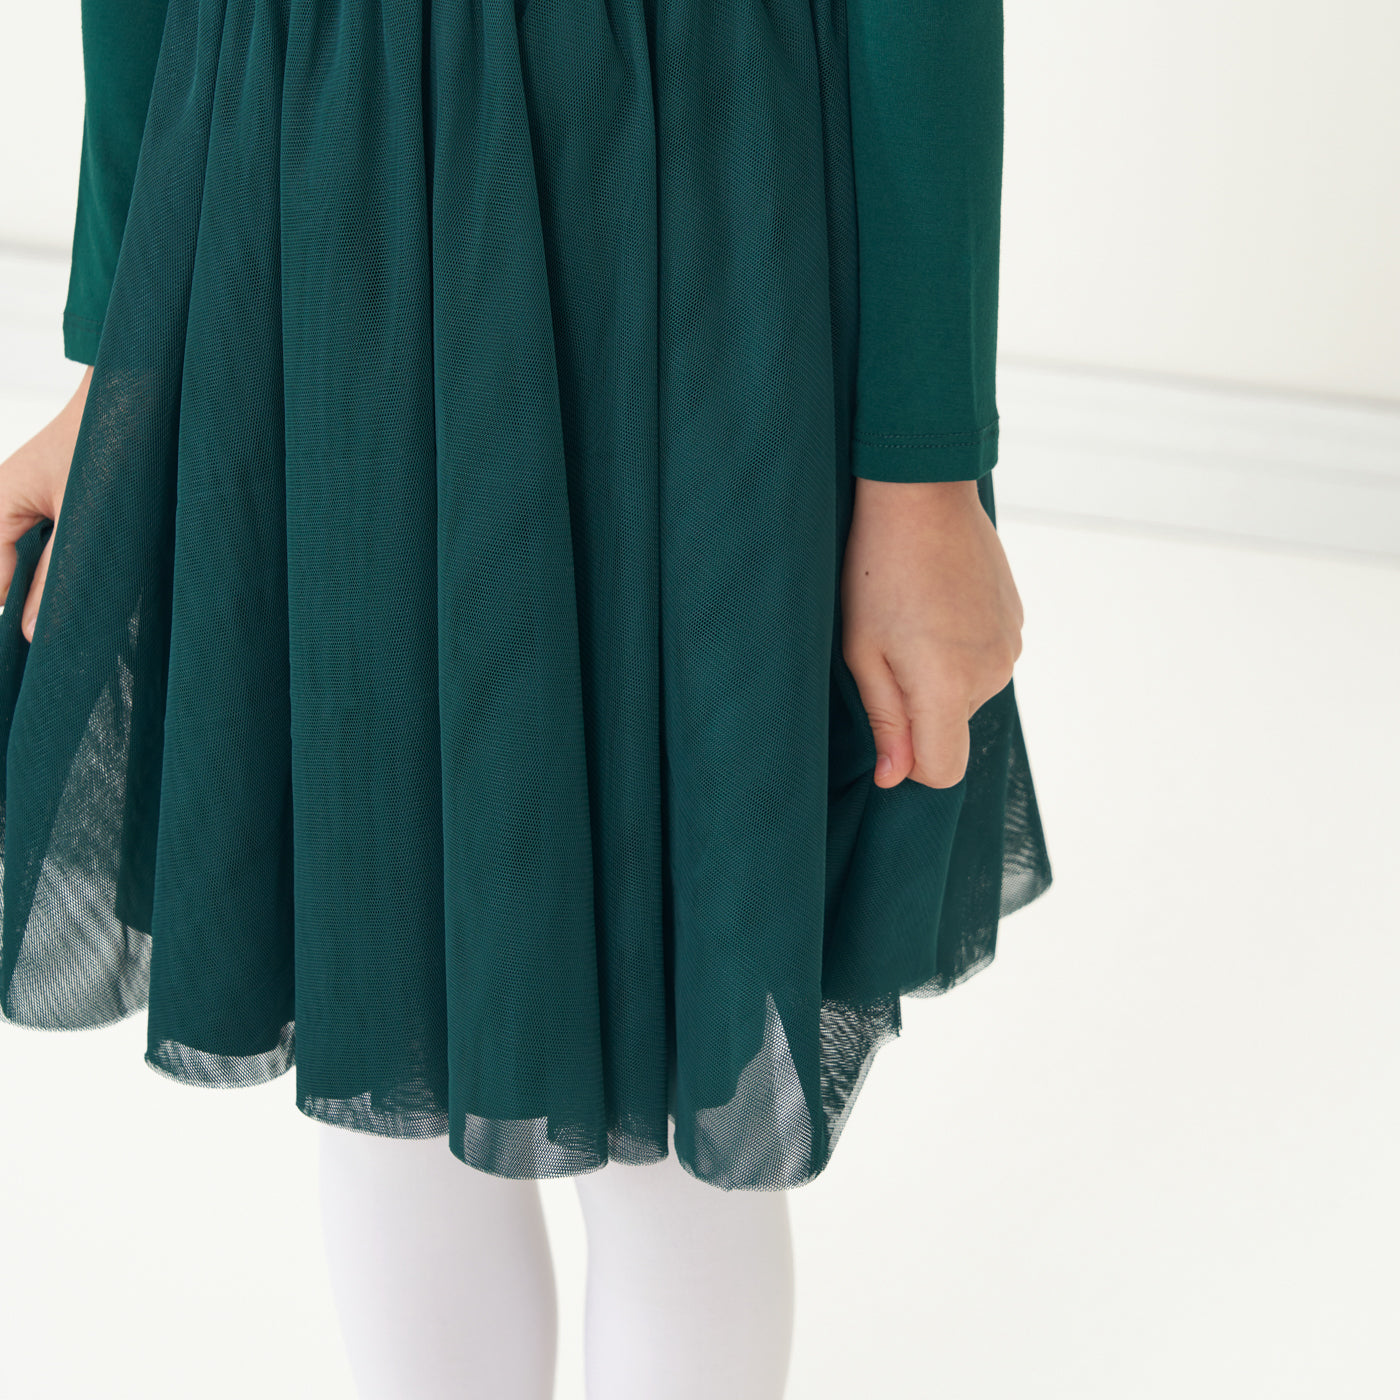 Close up image of a child wearing an Emerald flutter tutu dress showing off the tutu skirt